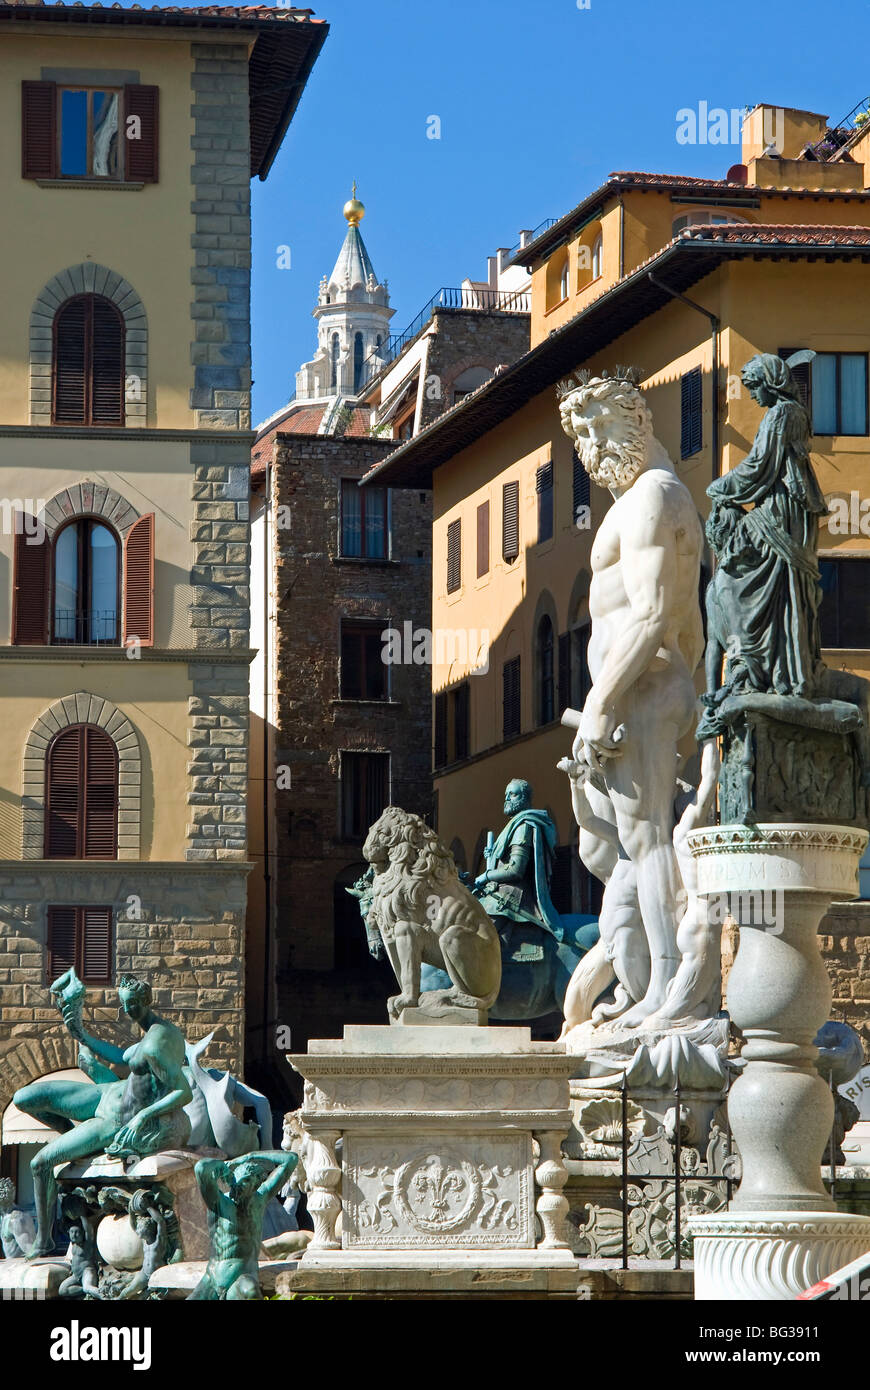 La statue de Neptune (Biancone), la Piazza della Signoria, Florence (Firenze), UNESCO World Heritage Site, Toscane, Italie, Europe Banque D'Images